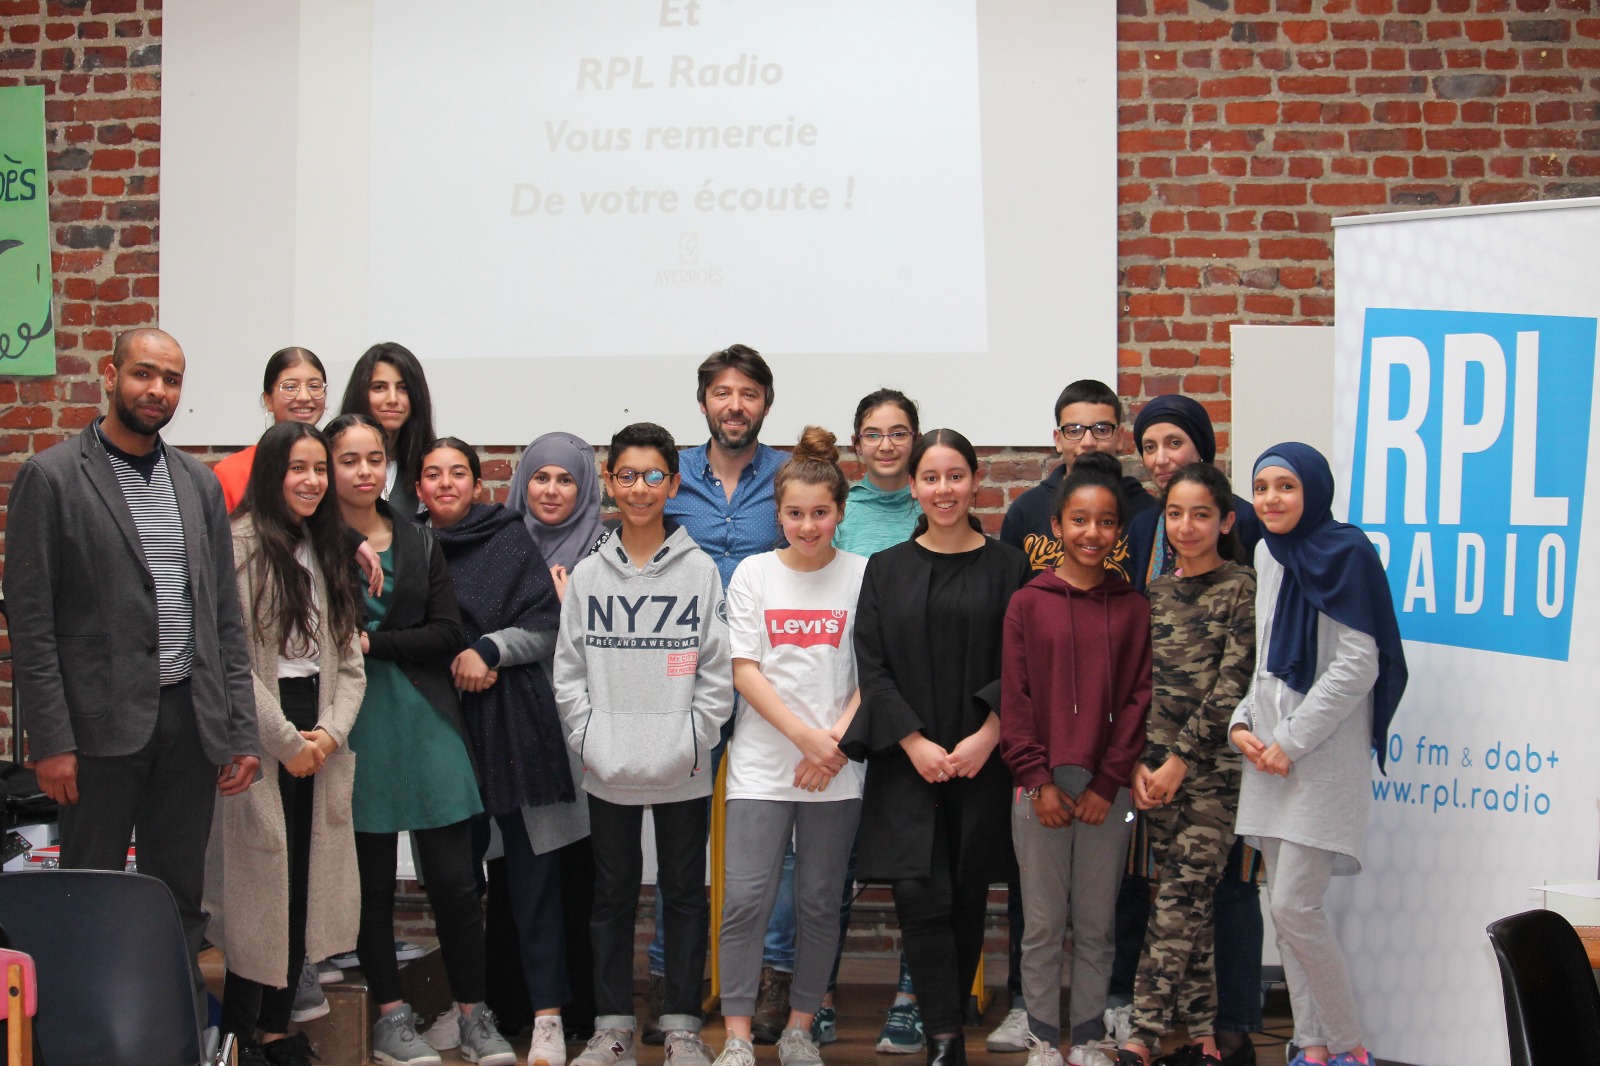 Averroès FM, avec RPL Radio